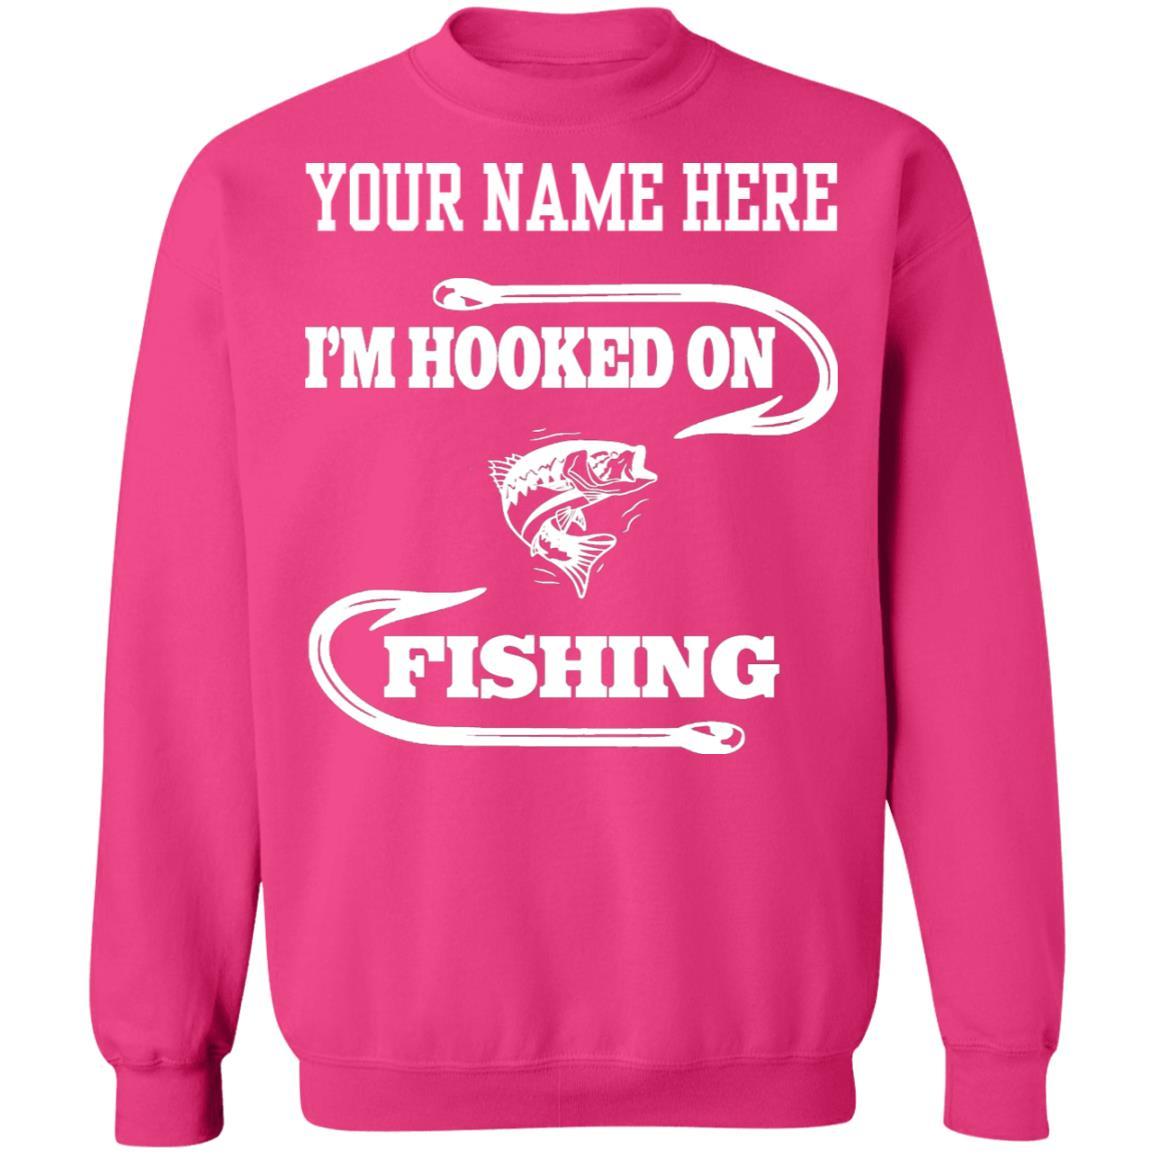 I'm hooked on fishing sweatshirt heliconia